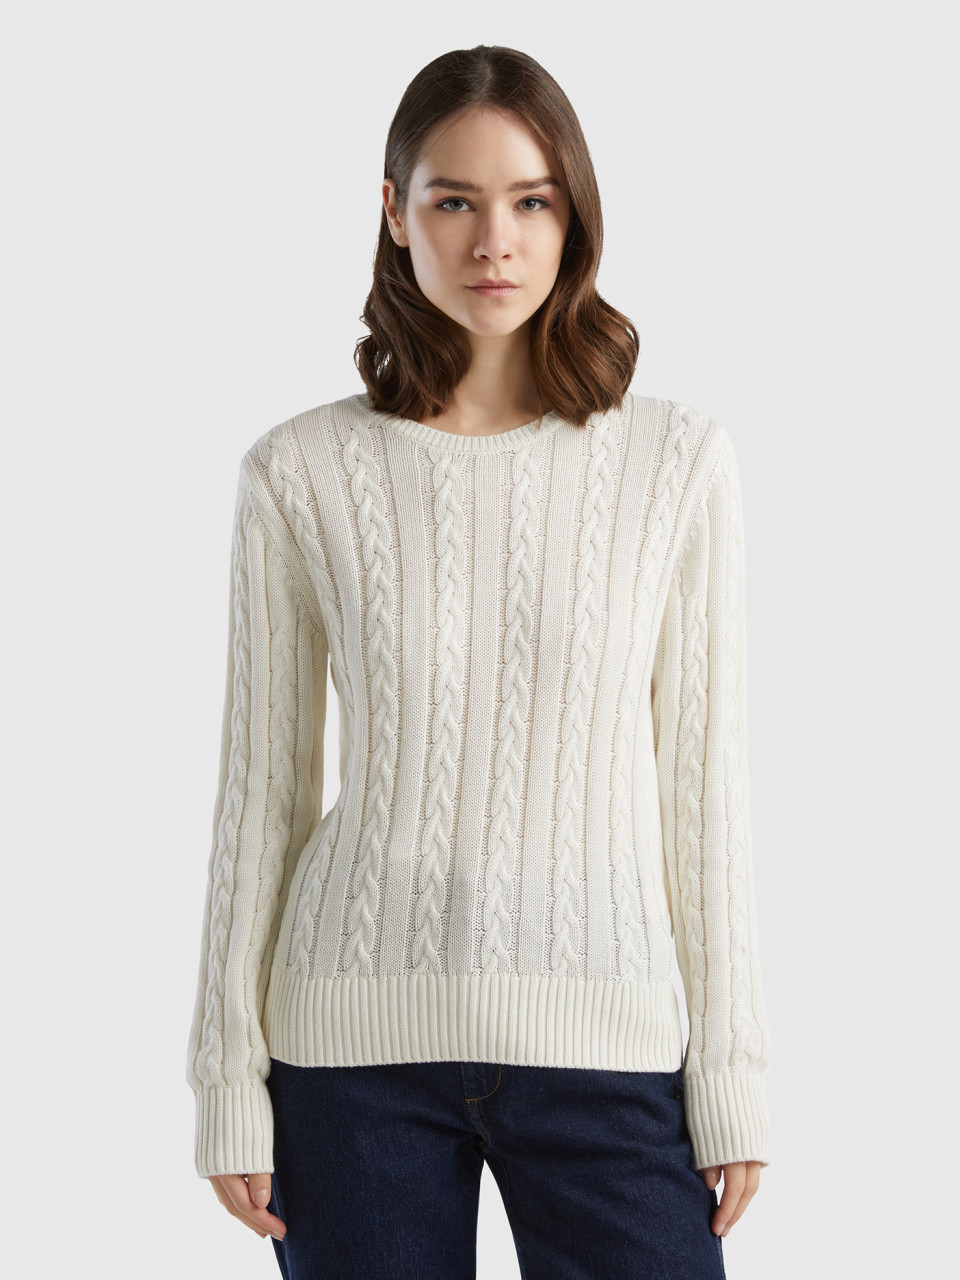 Benetton, Cable Knit Sweater 100% Cotton, Creamy White, Women